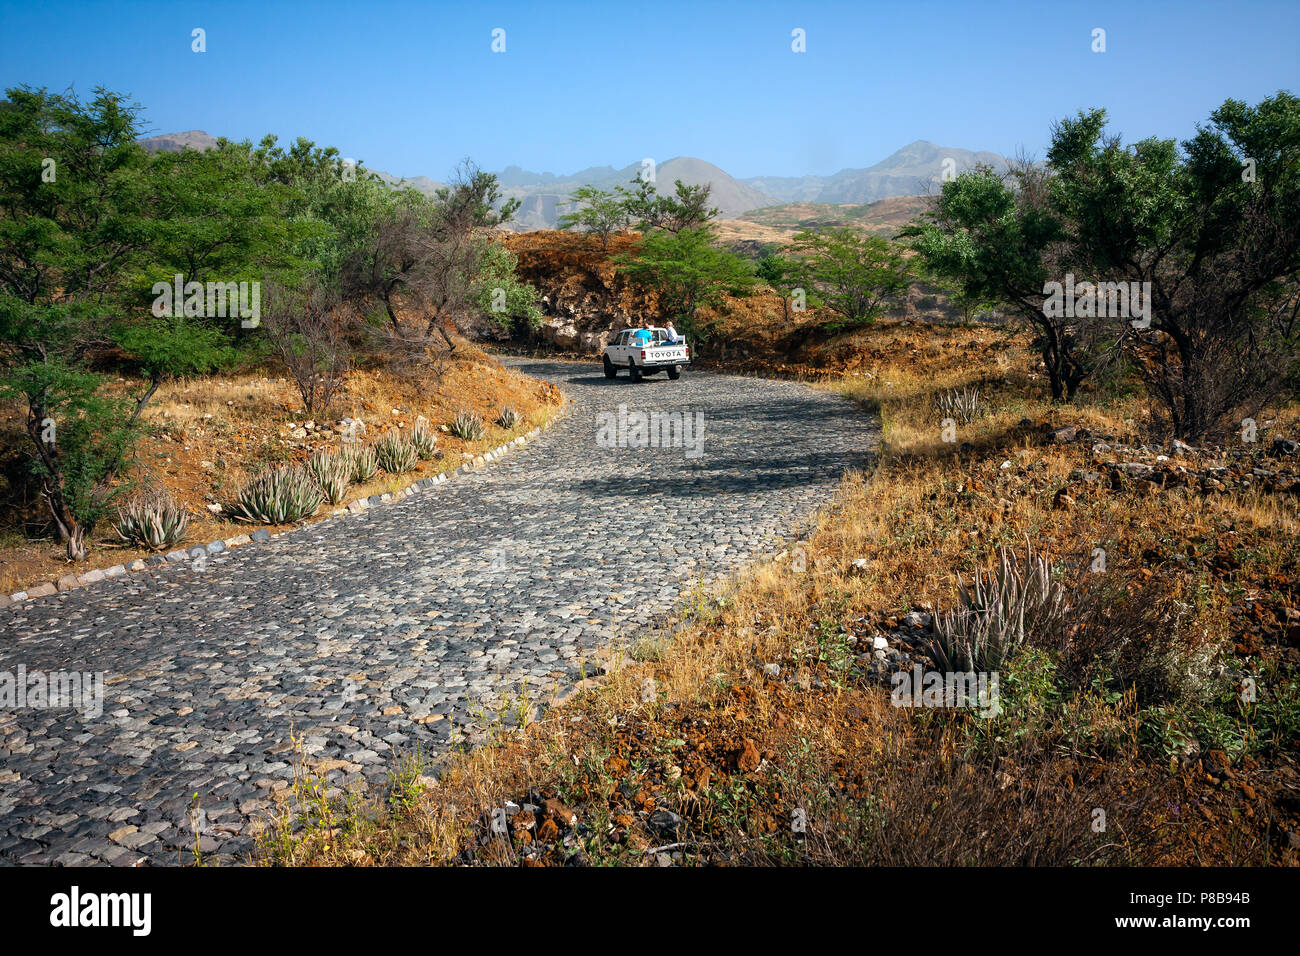 SANTO ANTAO, CAPE VERDE - DECEMBER 08, 2015: Winding stone road among hills. Tourists explore the Santo Antao island   landscape in Toyota truck. Stock Photo